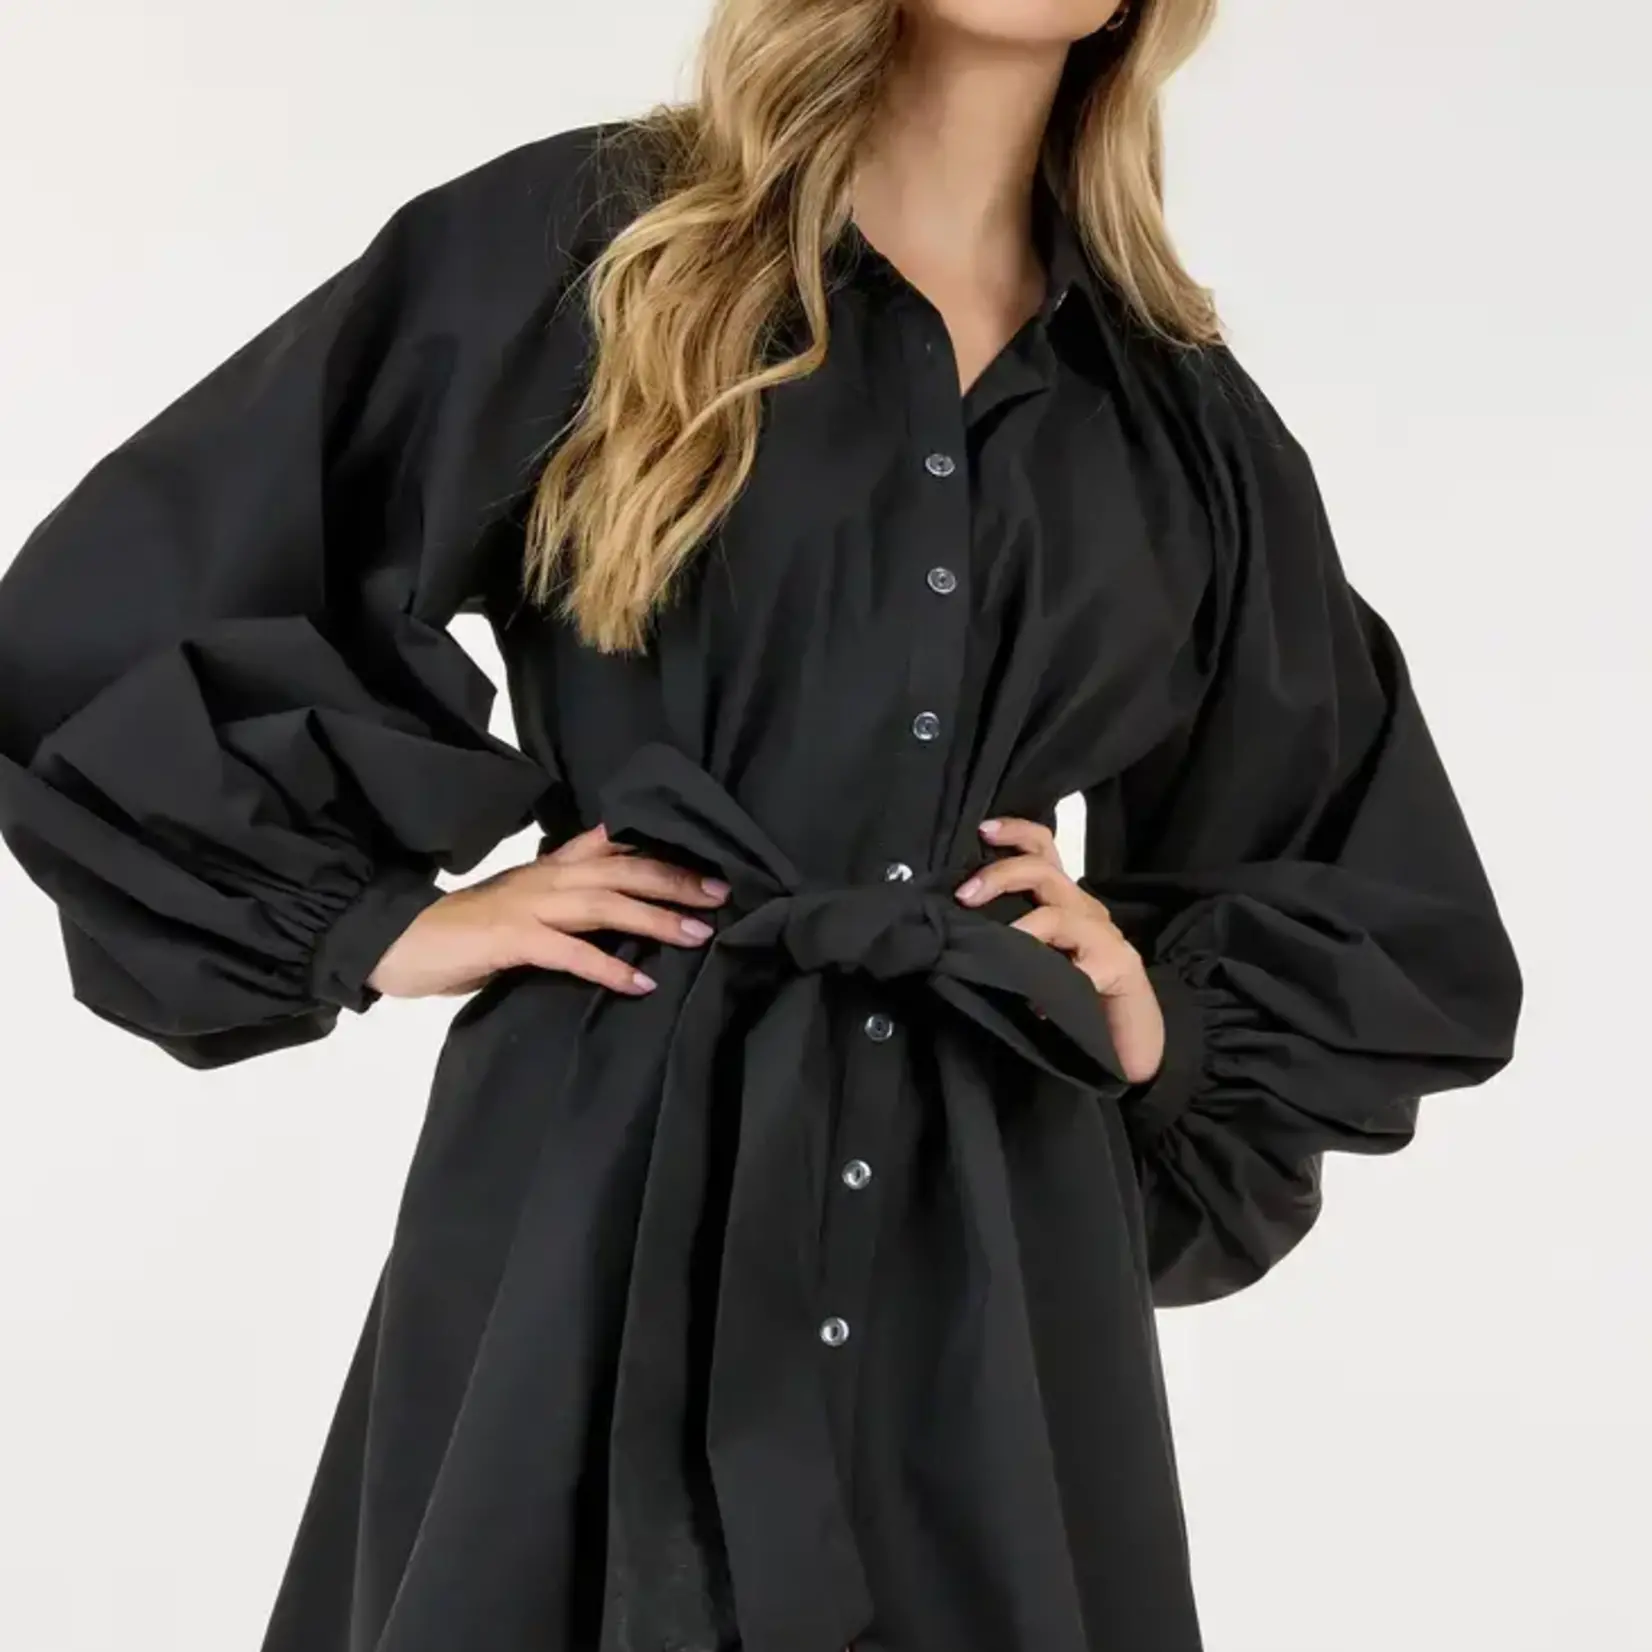 CQBYCQ Bubble Sleeve Dress Black